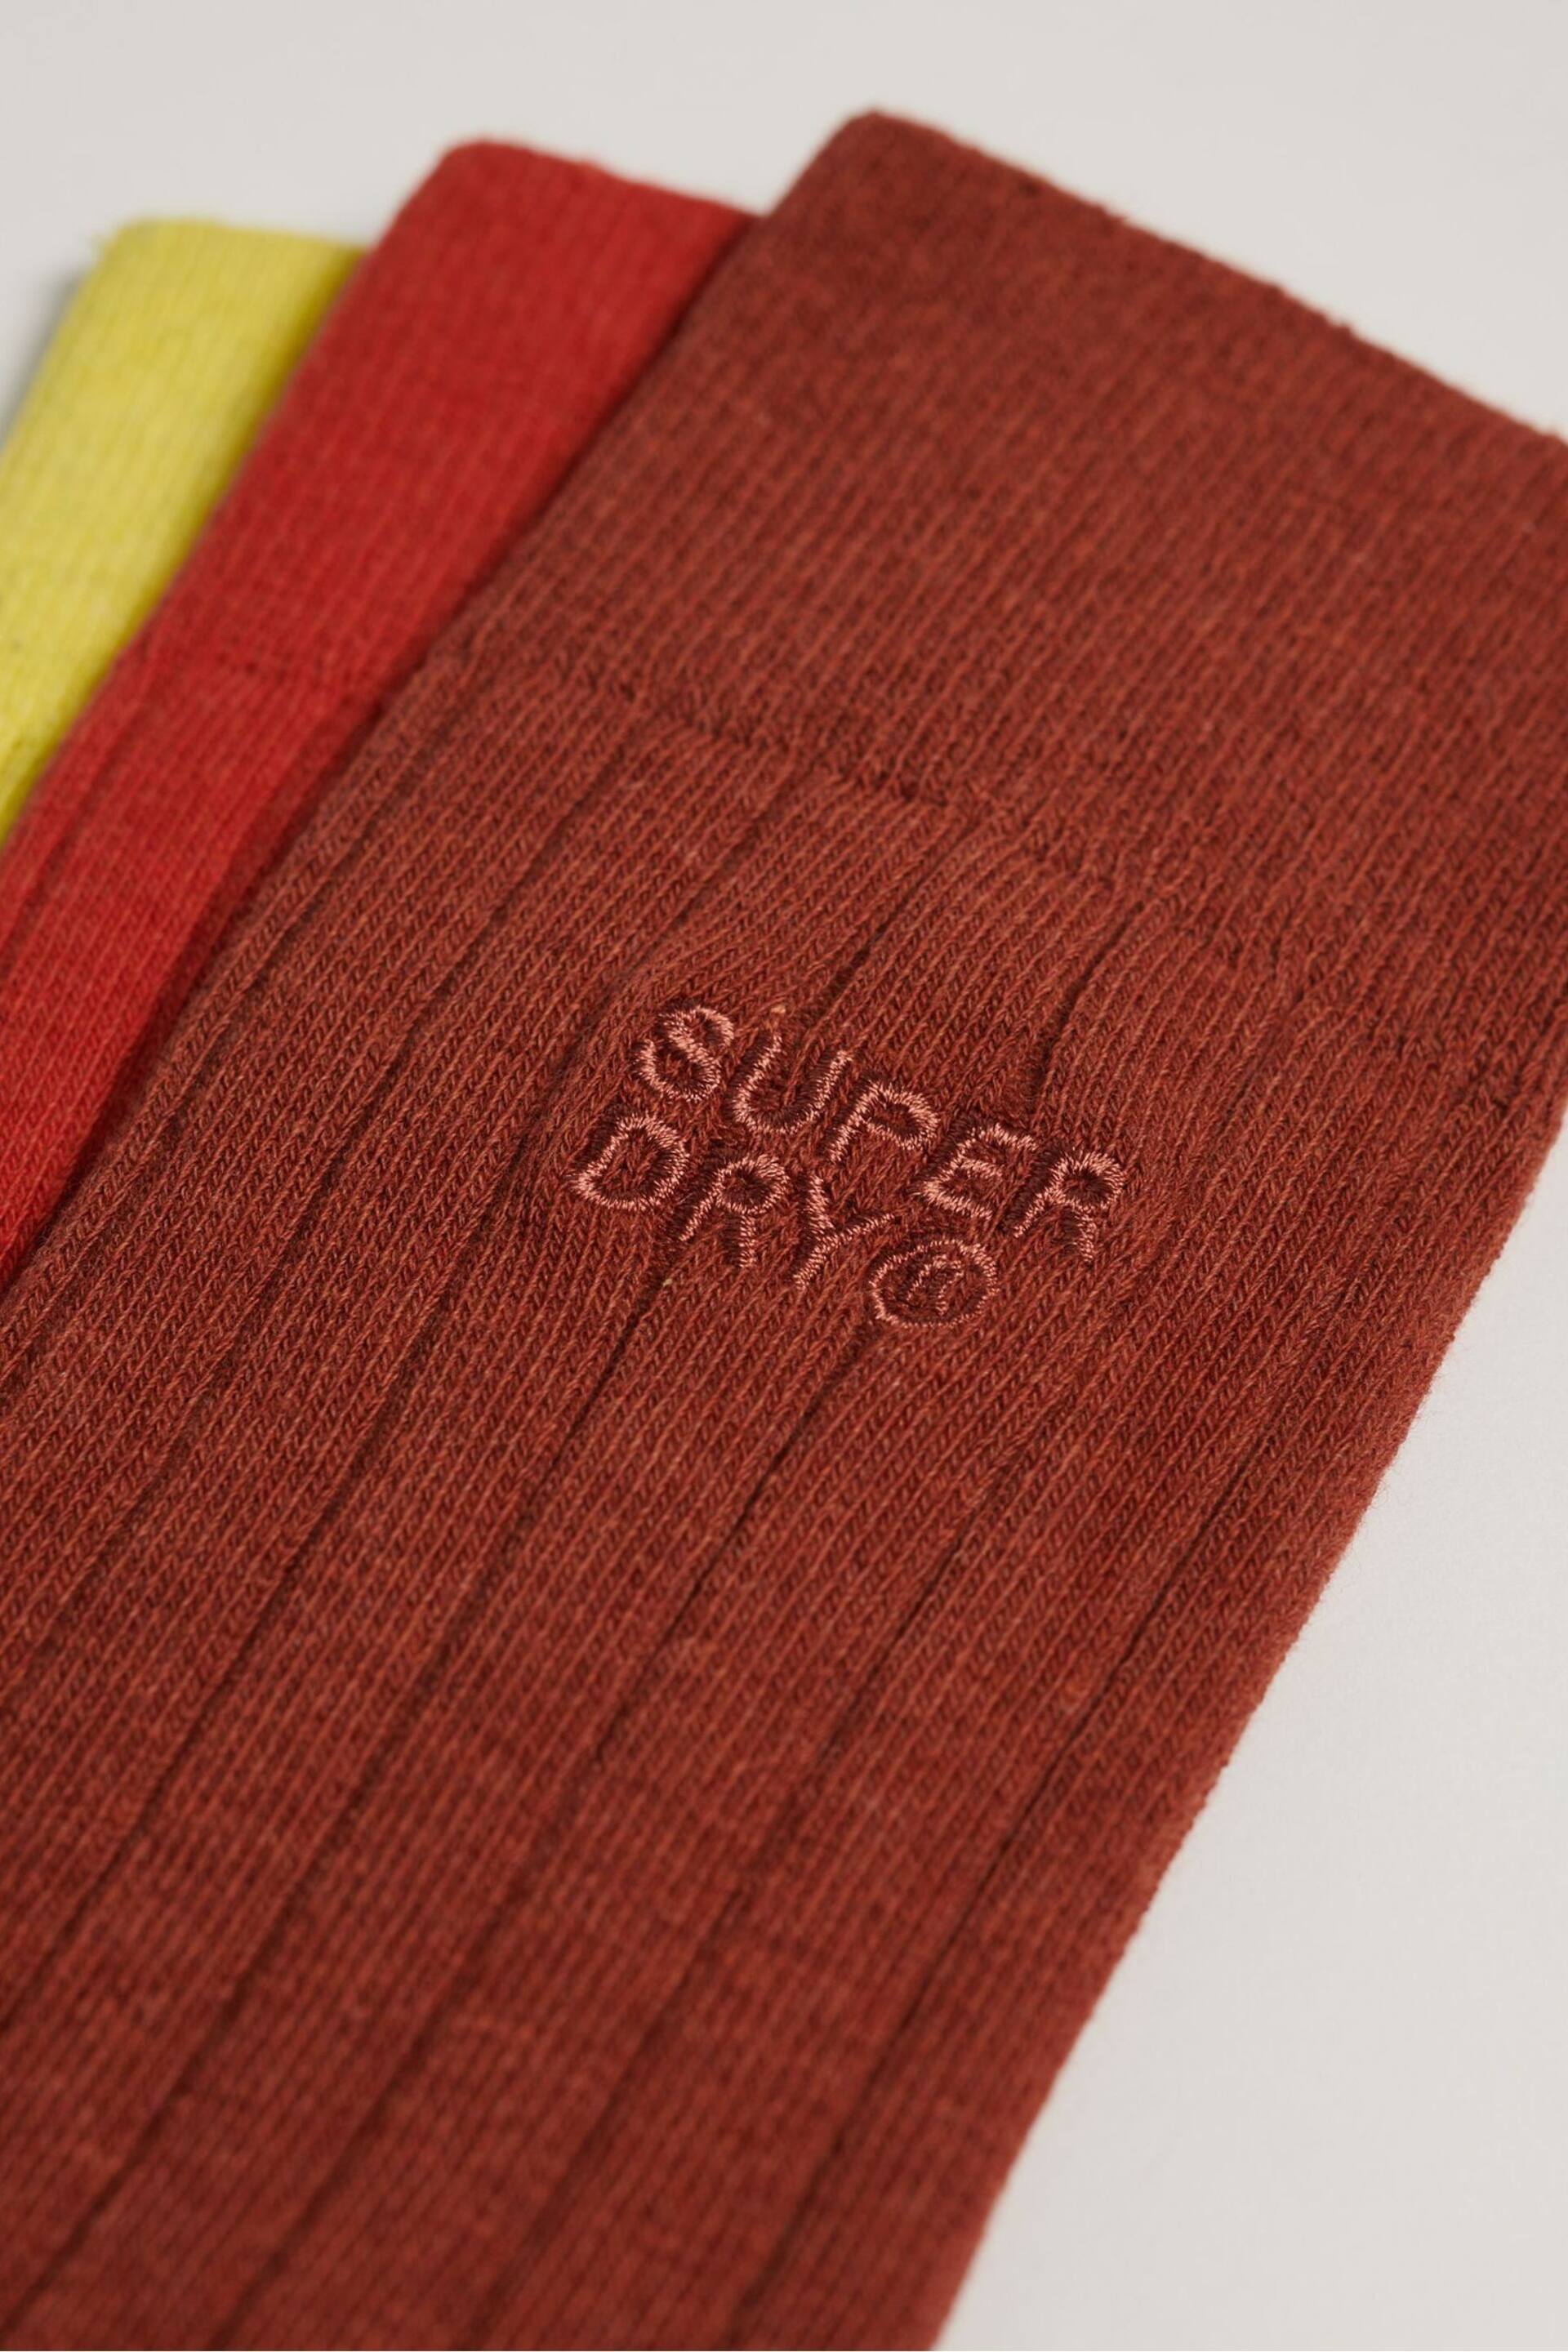 Superdry Red Organic Cotton Unisex Core Rib Crew Socks 3 Pack - Image 5 of 5